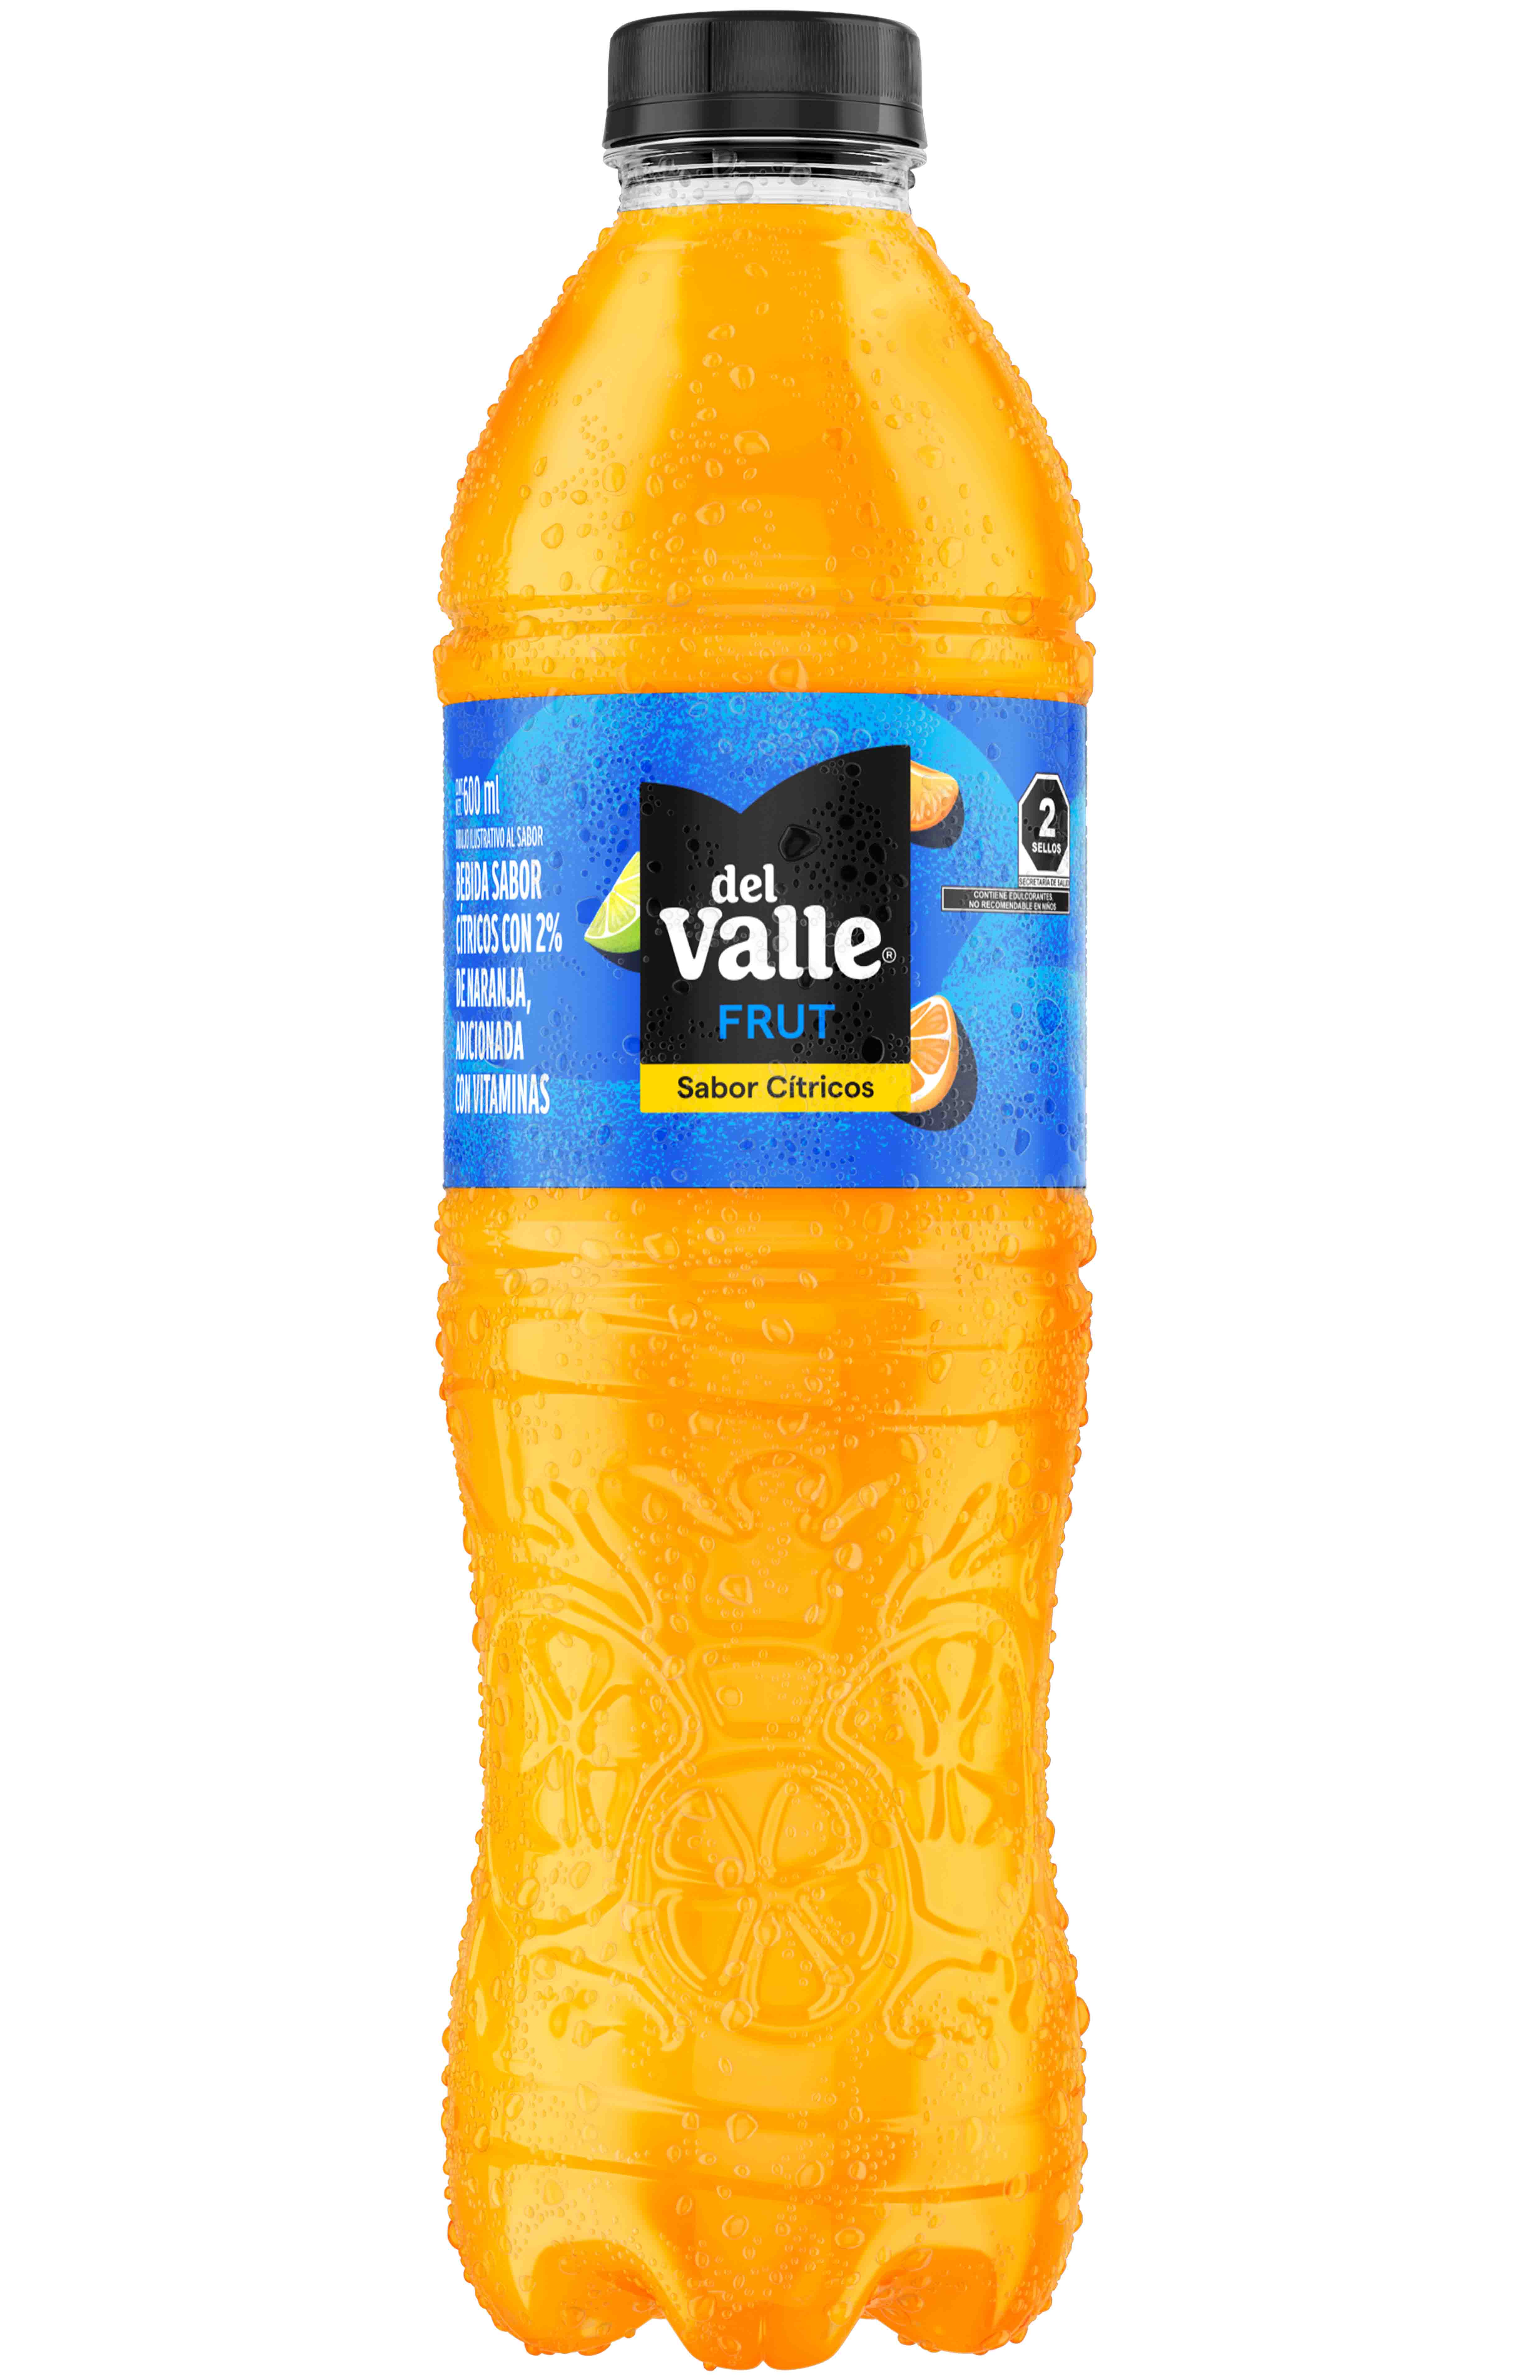 Botella de Fanta sabor Naranja